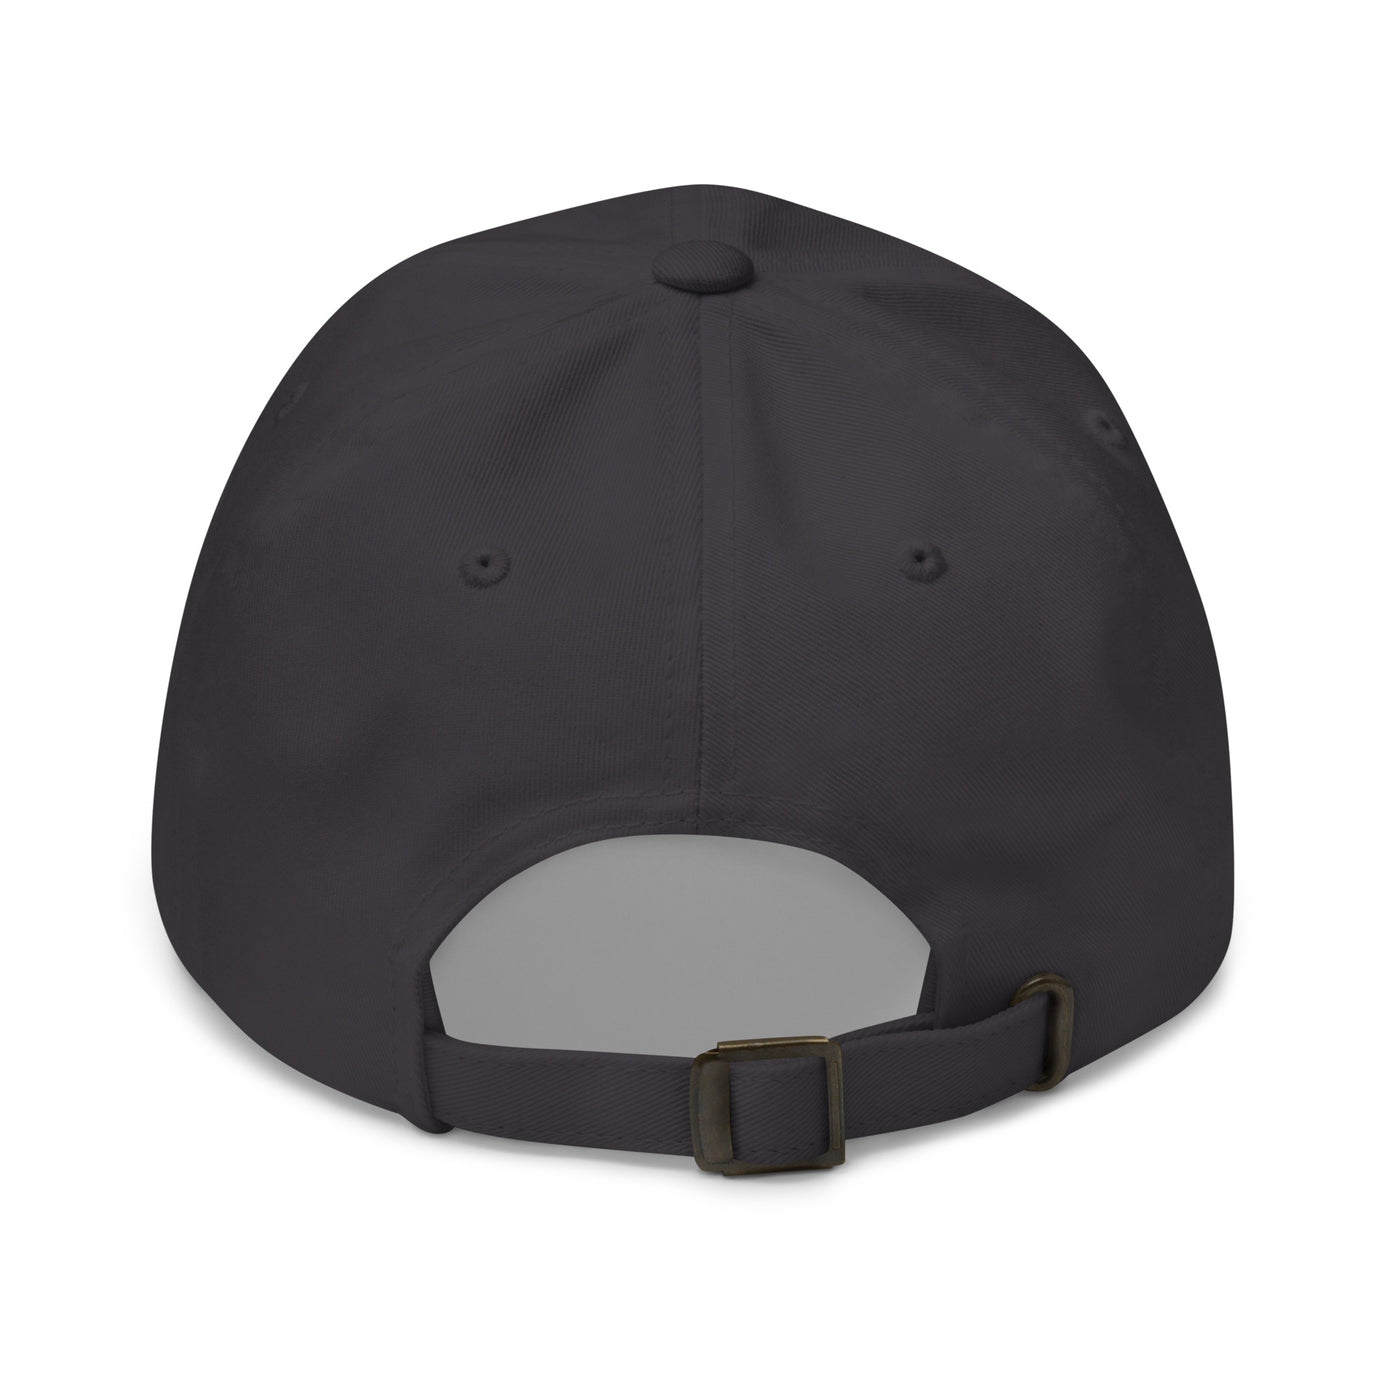 Tennis Unisex Hat